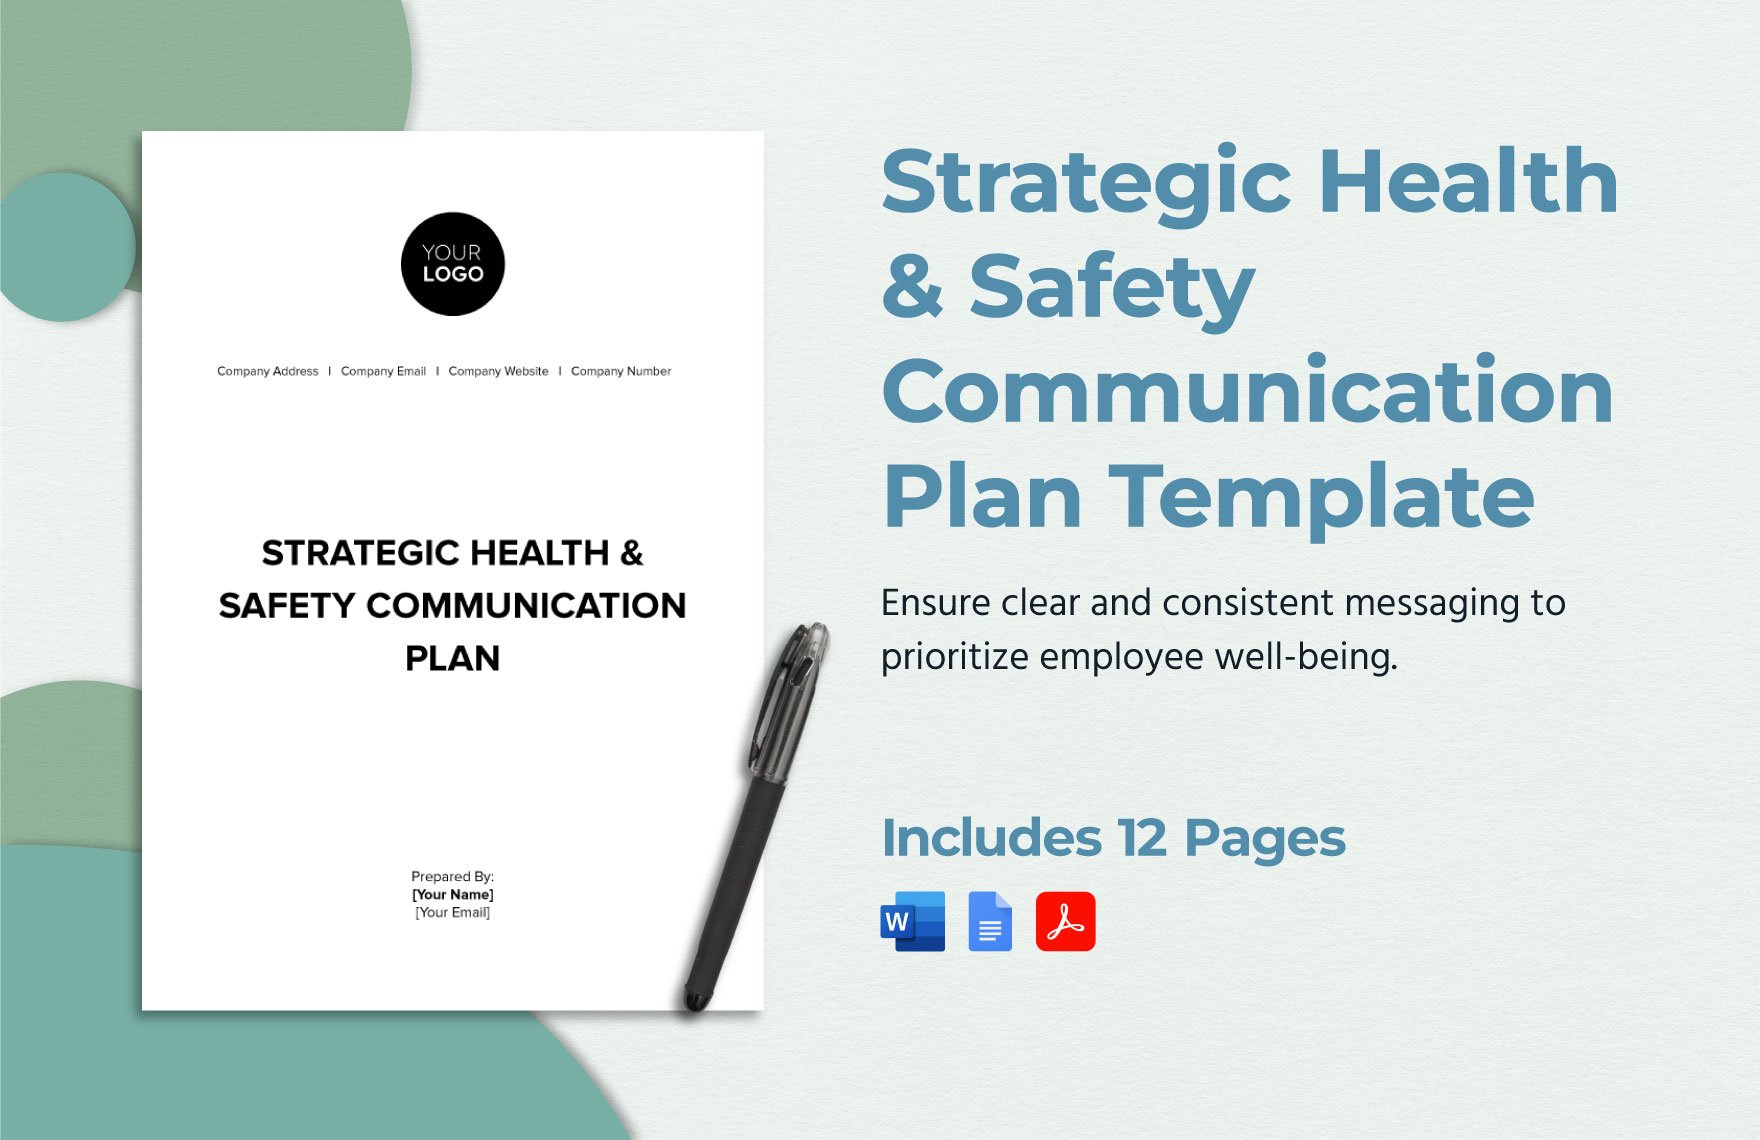 Strategic Health & Safety Communication Plan Template